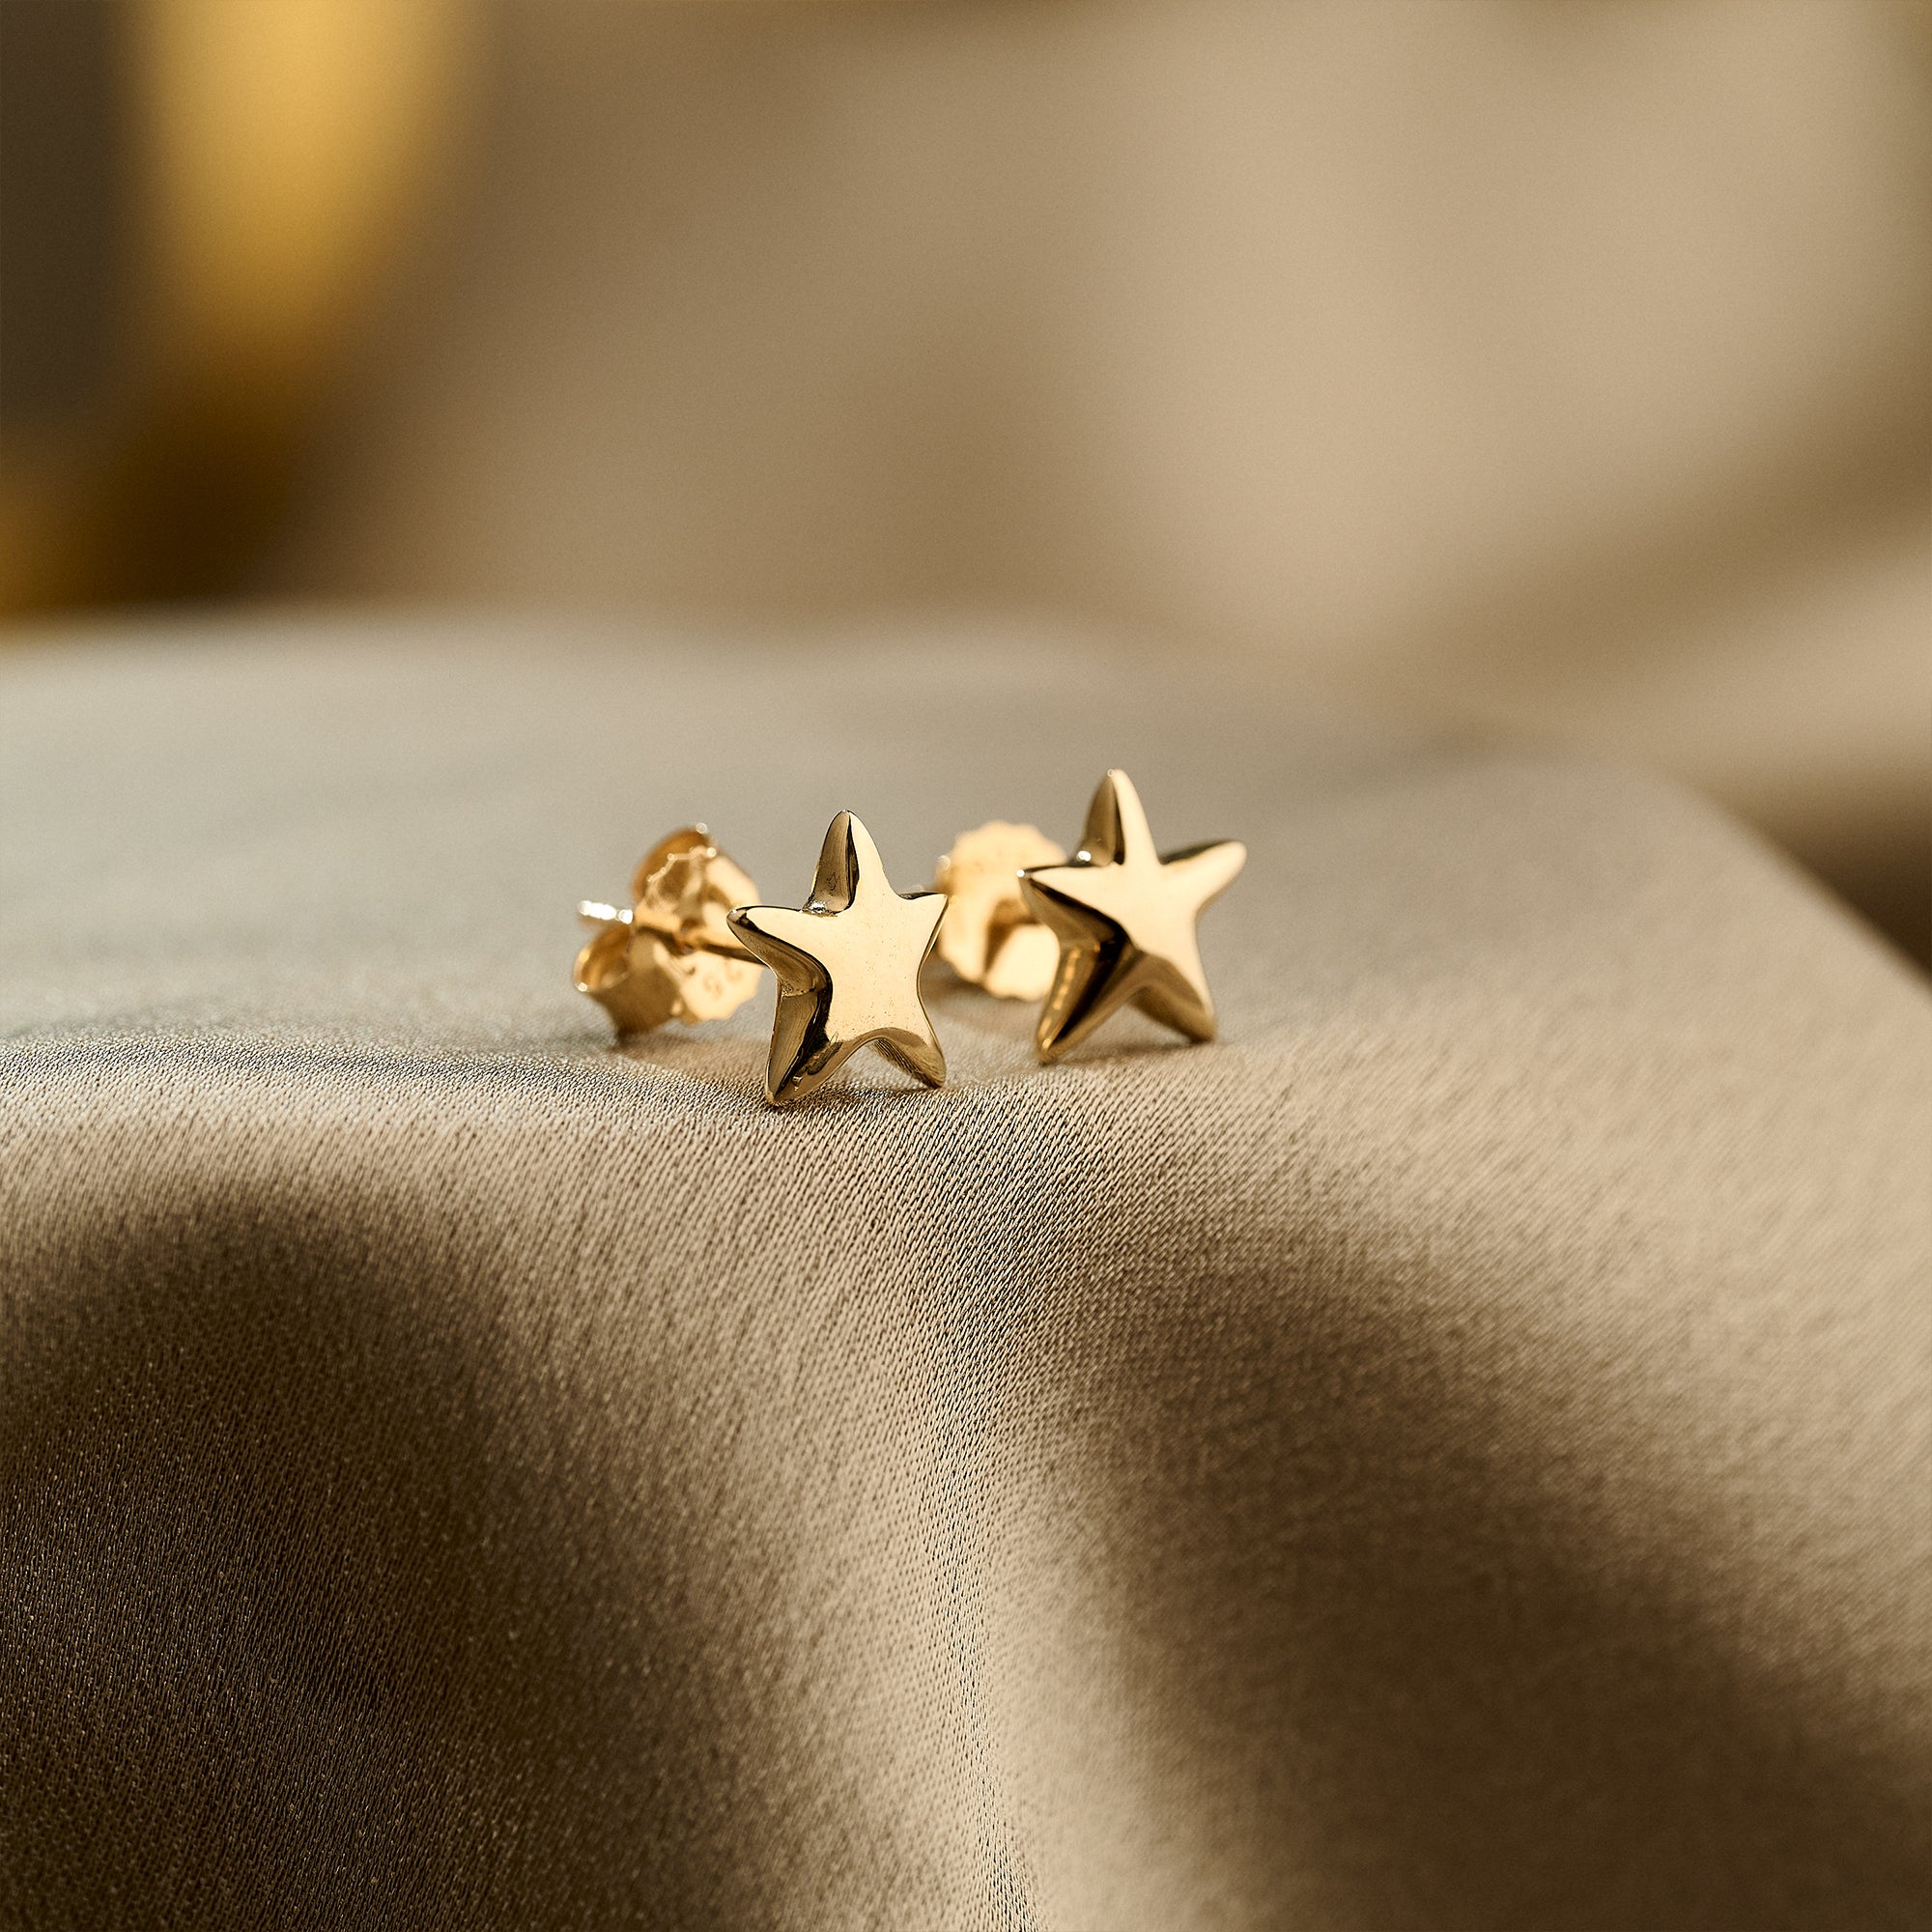 Solid recycled gold star stud earrings made in UK Scarlett Jewellery designer